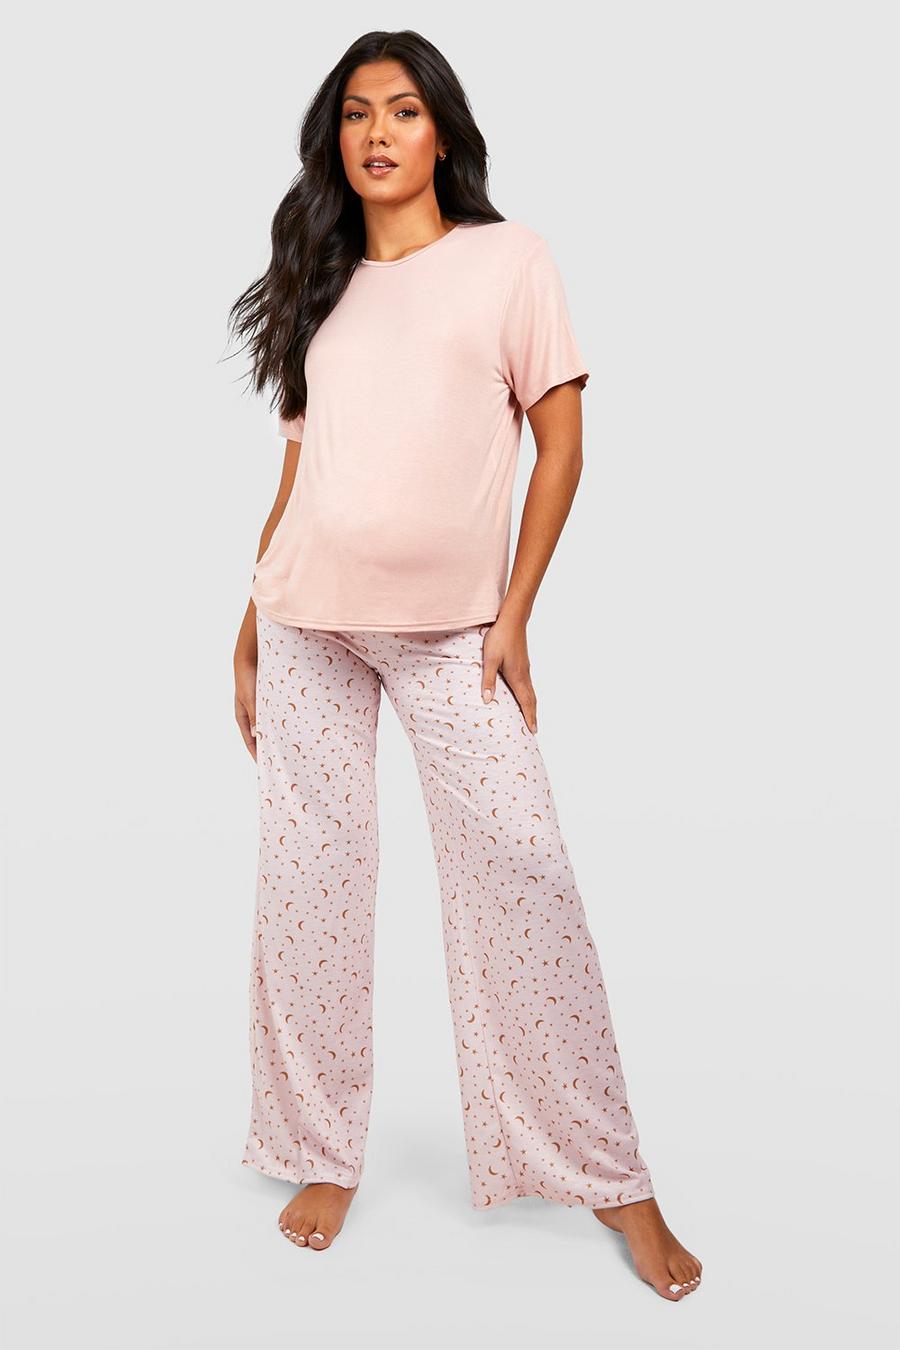 Blush pink Maternity Star Print Pyjama Set